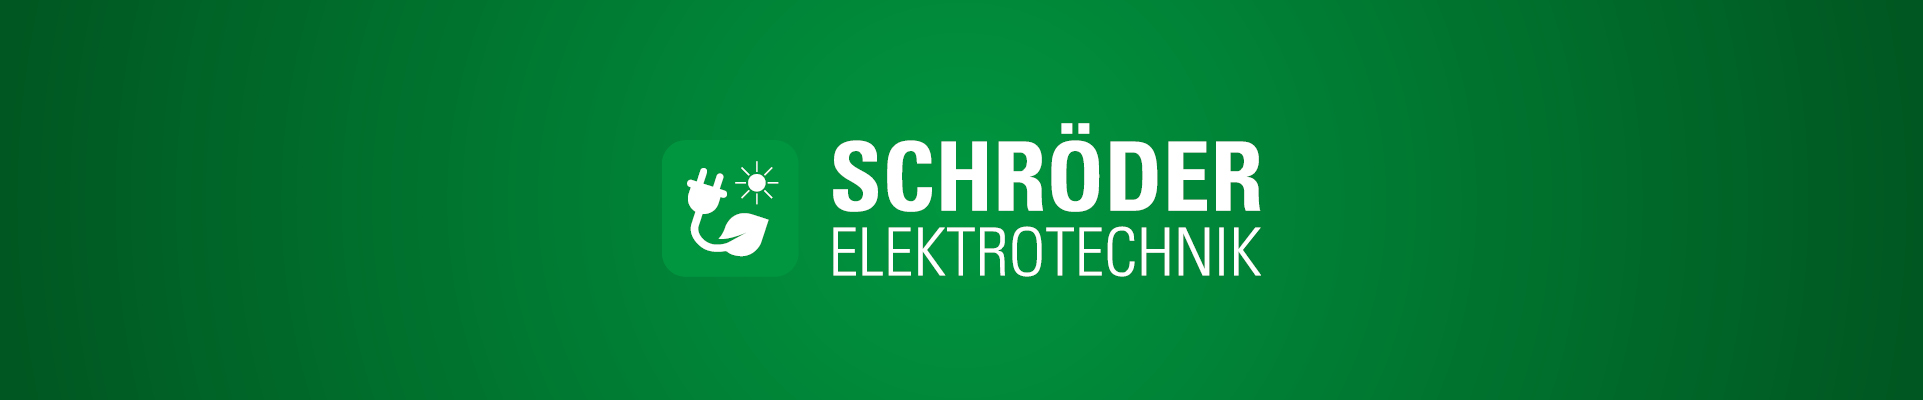 André Schröder Elektrotechnik GmbH & Co. KG - Dörentrup, Lemgo, Blomberg, Extertal, Barntrup, Kalletal